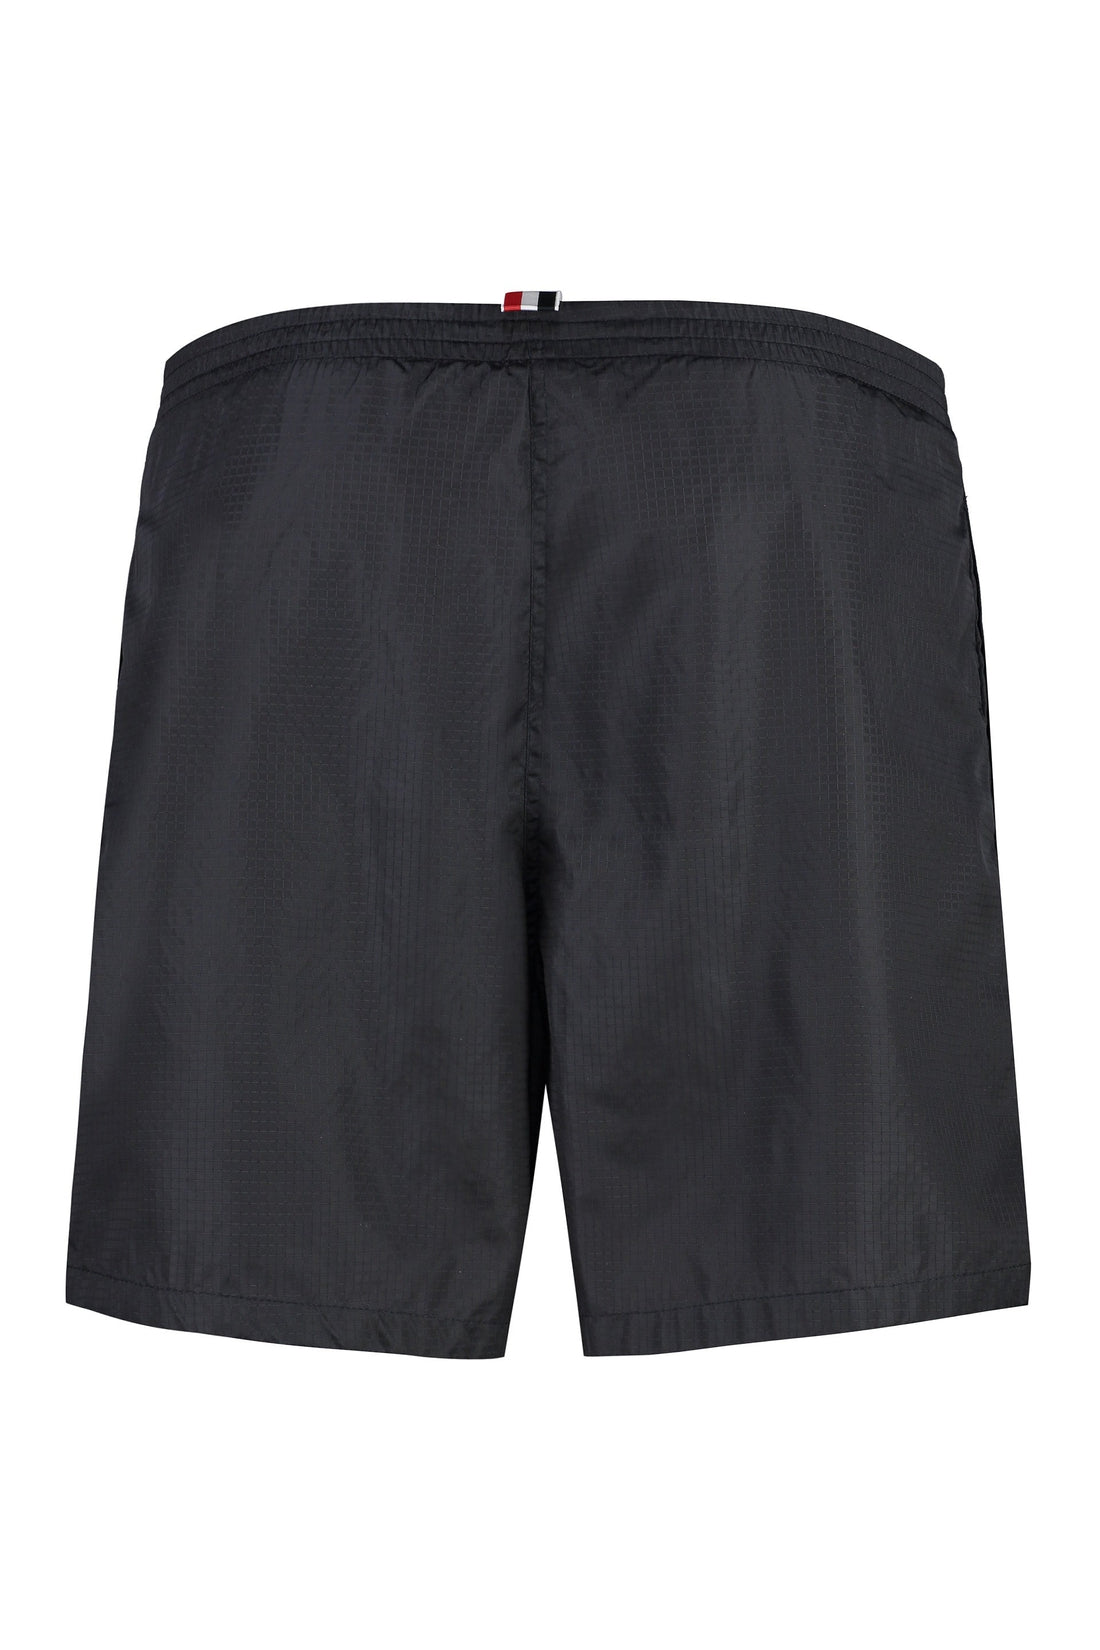 Thom Browne-OUTLET-SALE-Nylon shorts-ARCHIVIST